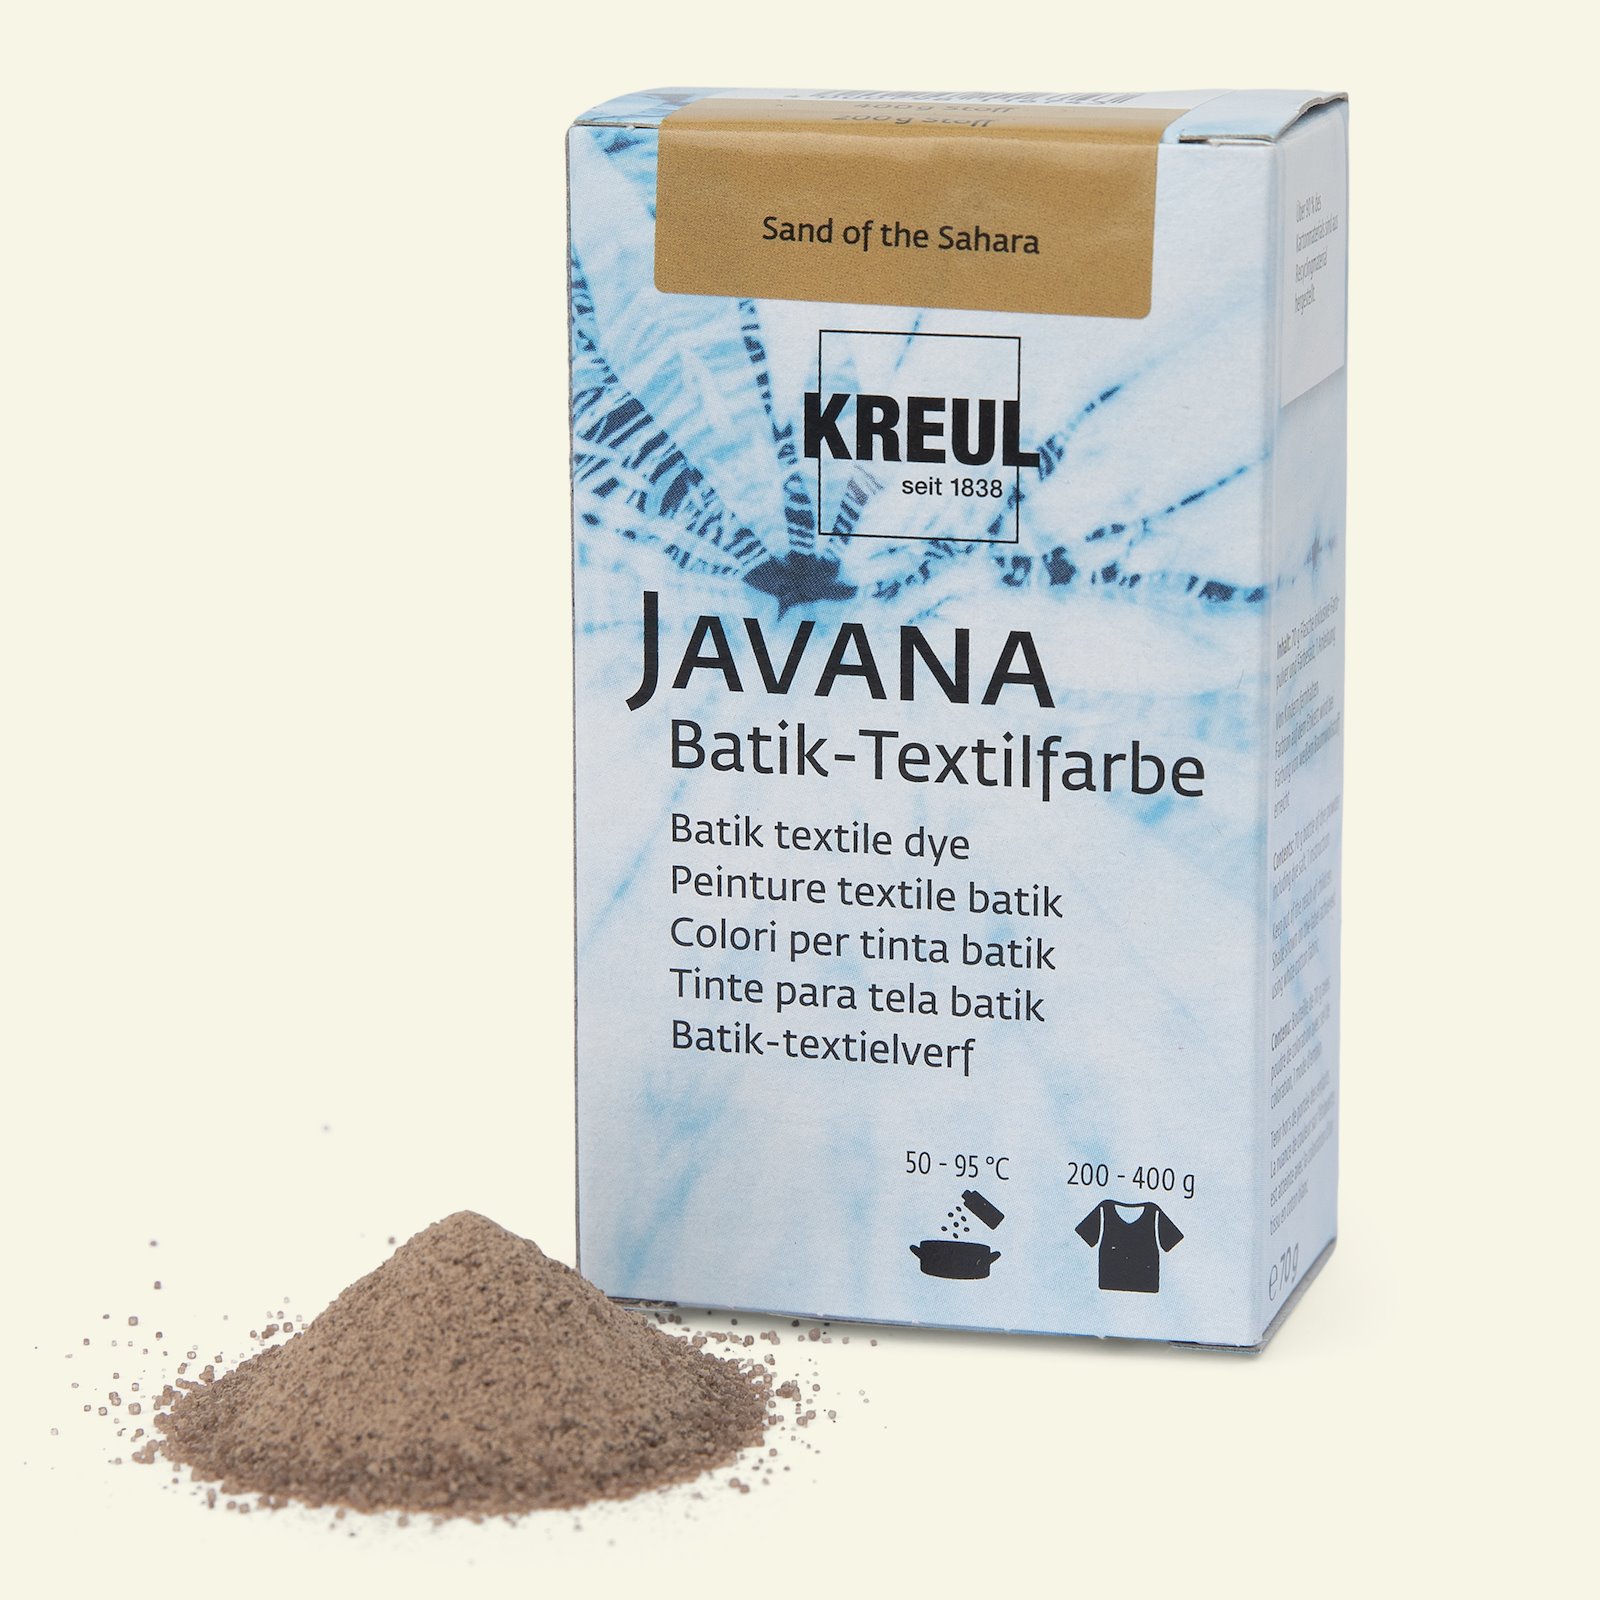 Javana batikkfarge, sand, 70g 29672_pack